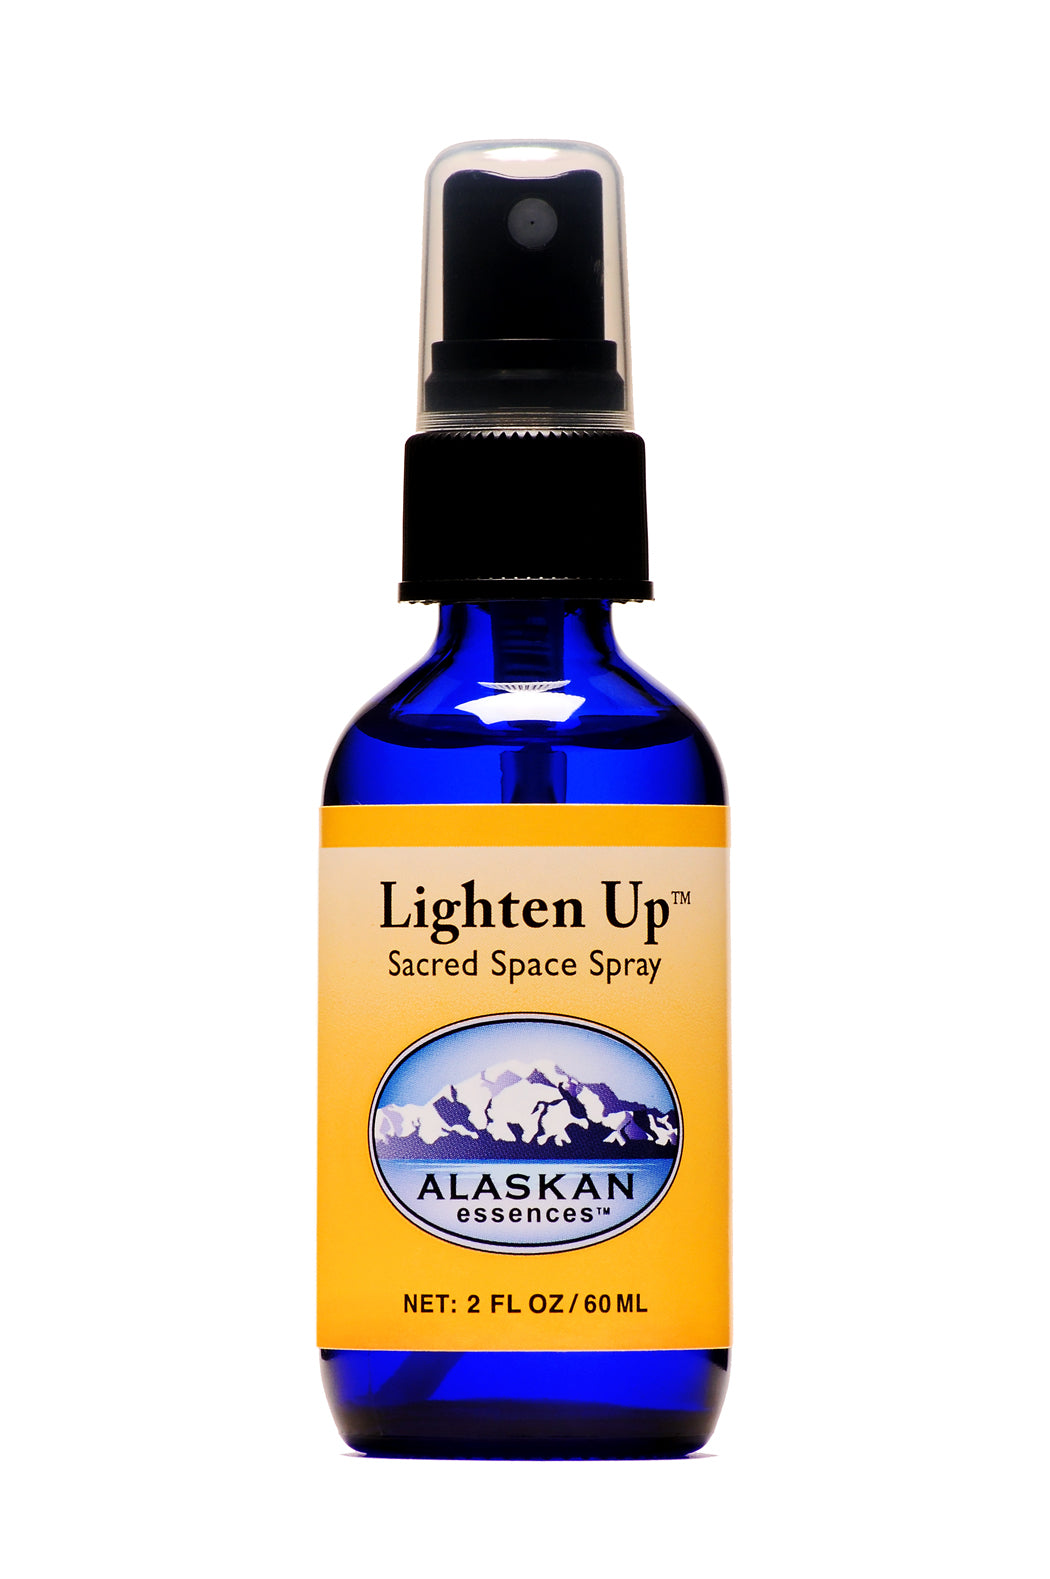 Lighten Up essence spray